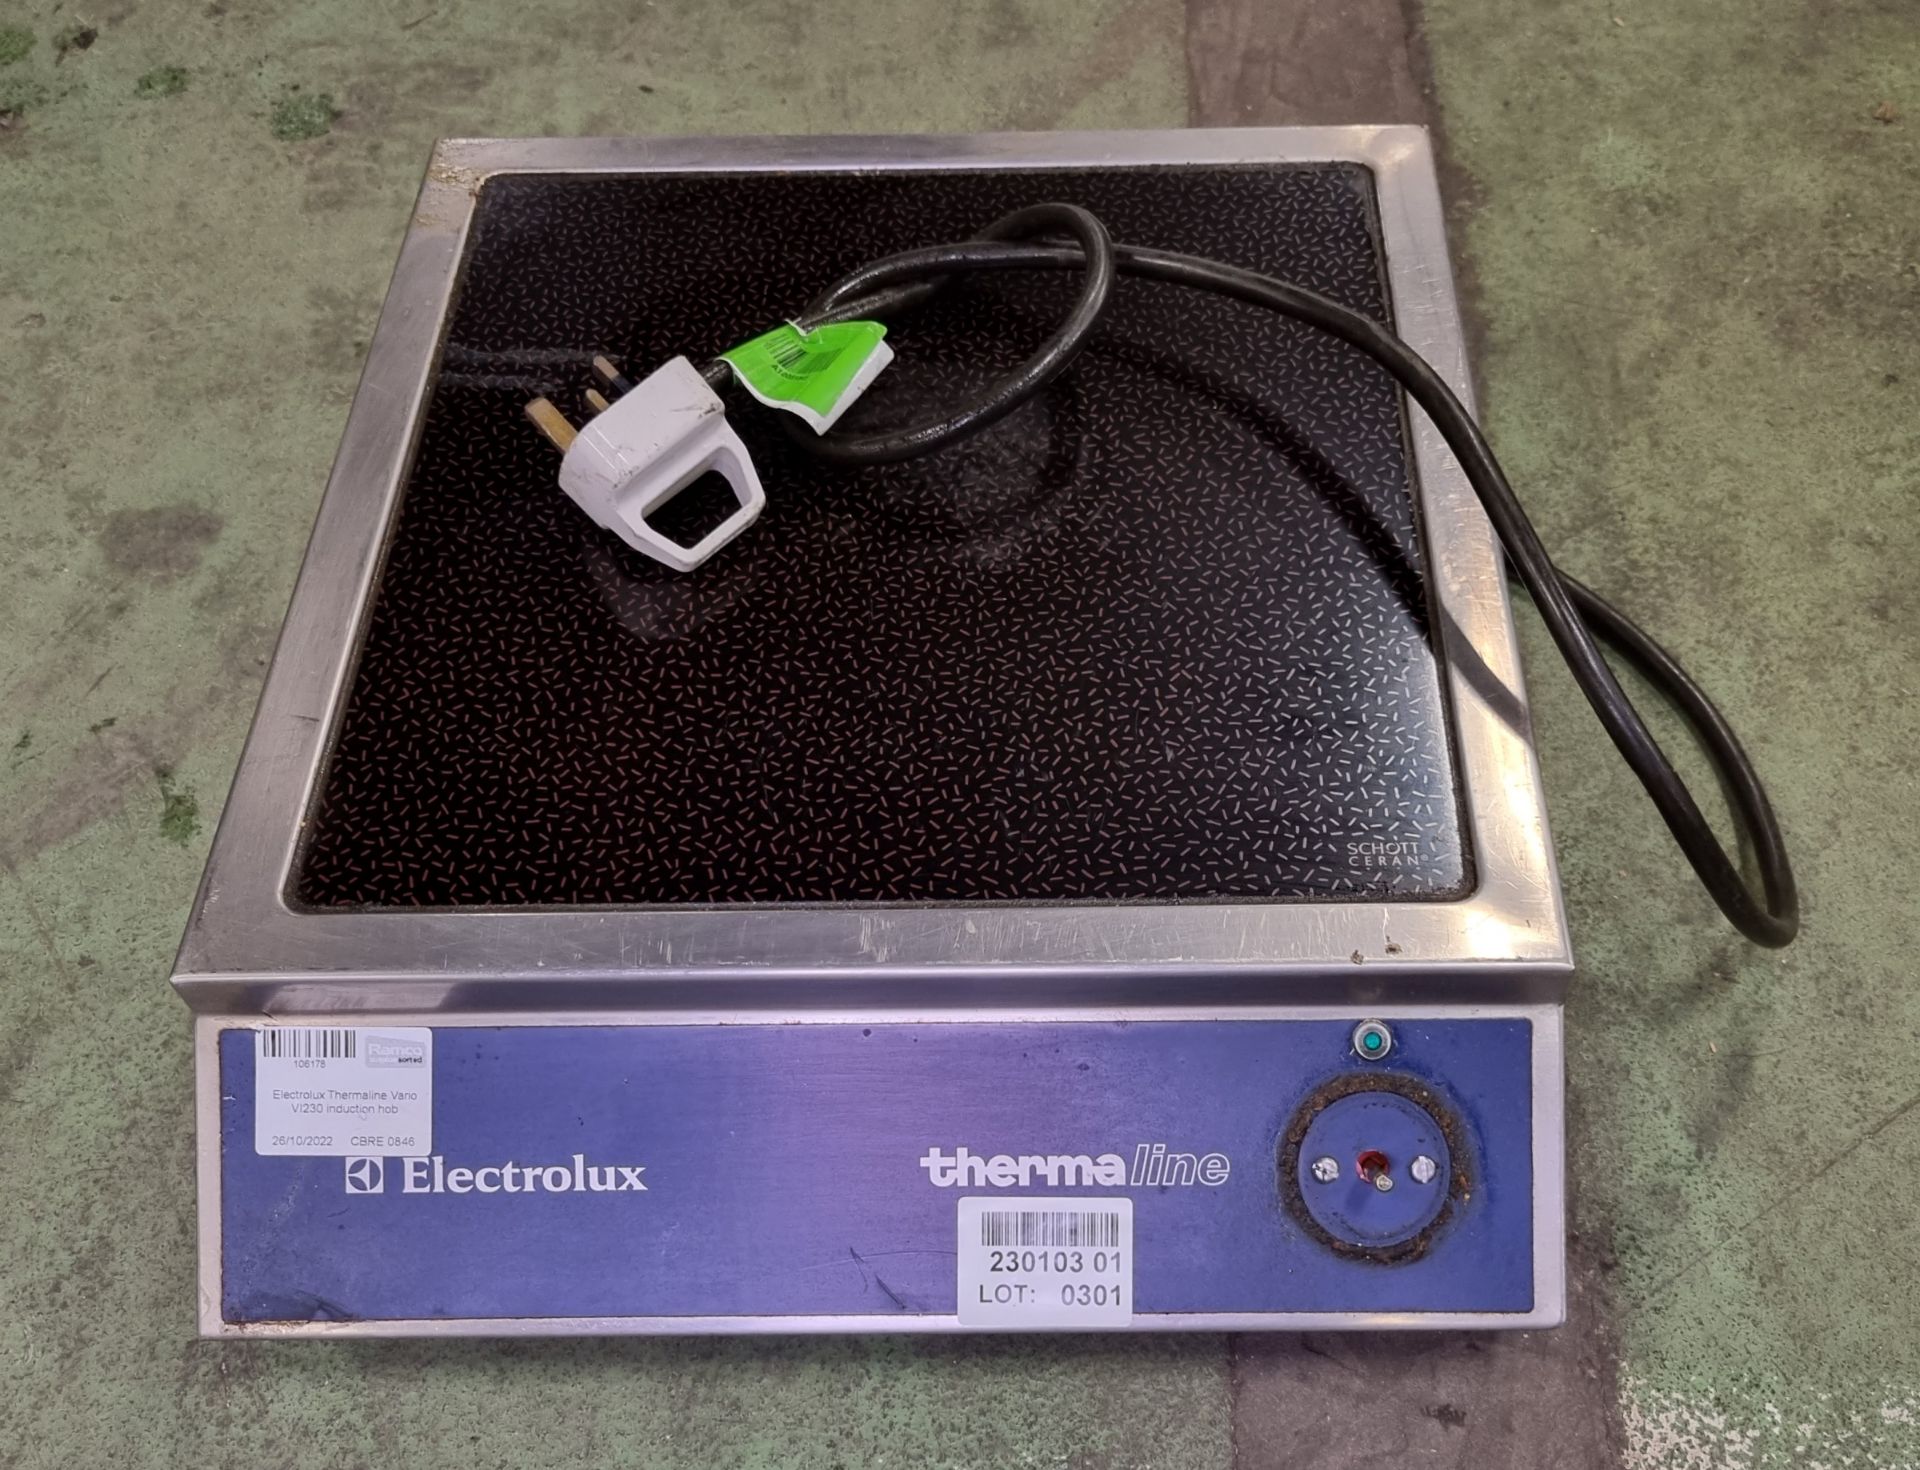 Electrolux Thermaline Vario VI230 induction hob